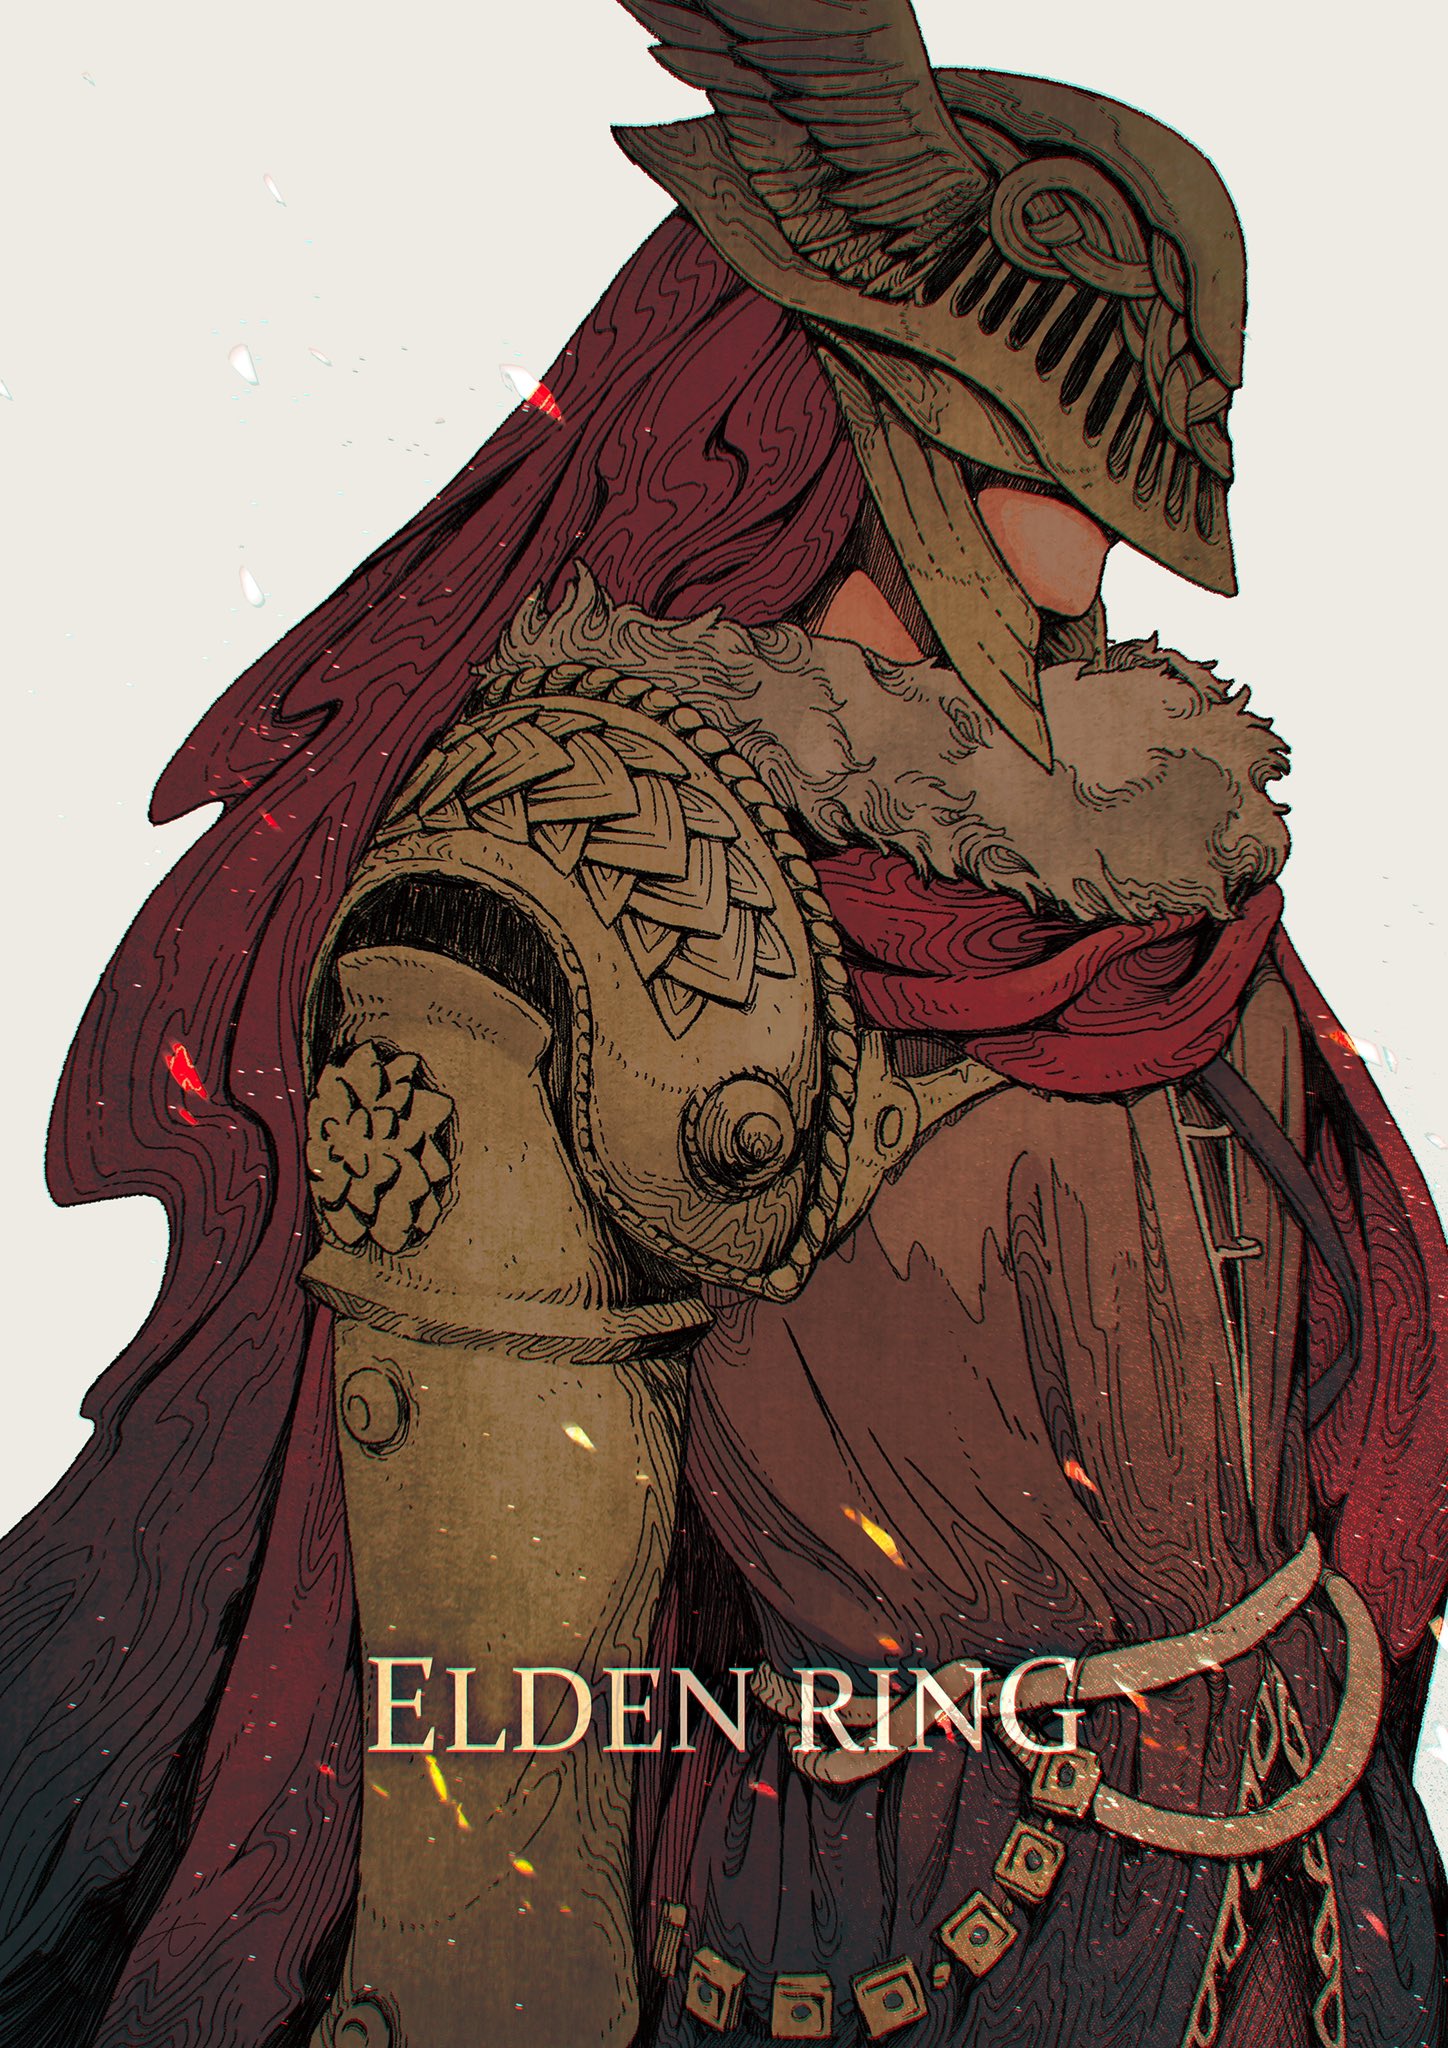 Malenia, Blade of Miquella - Original Elden Ring ACEO